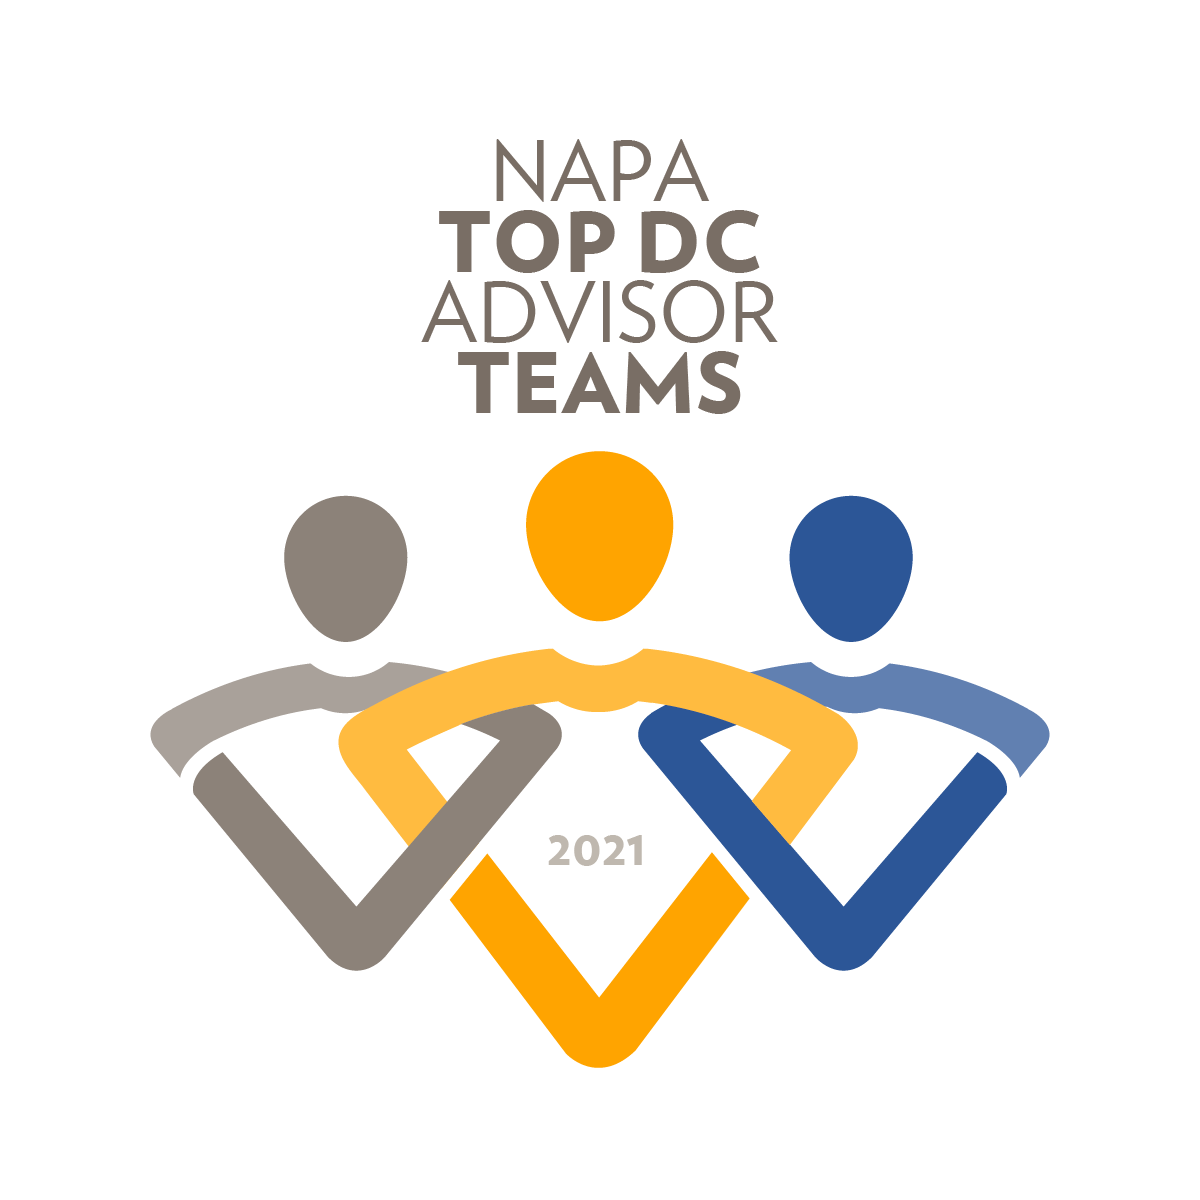 NAPA Names Nation’s Top DC Advisor Teams